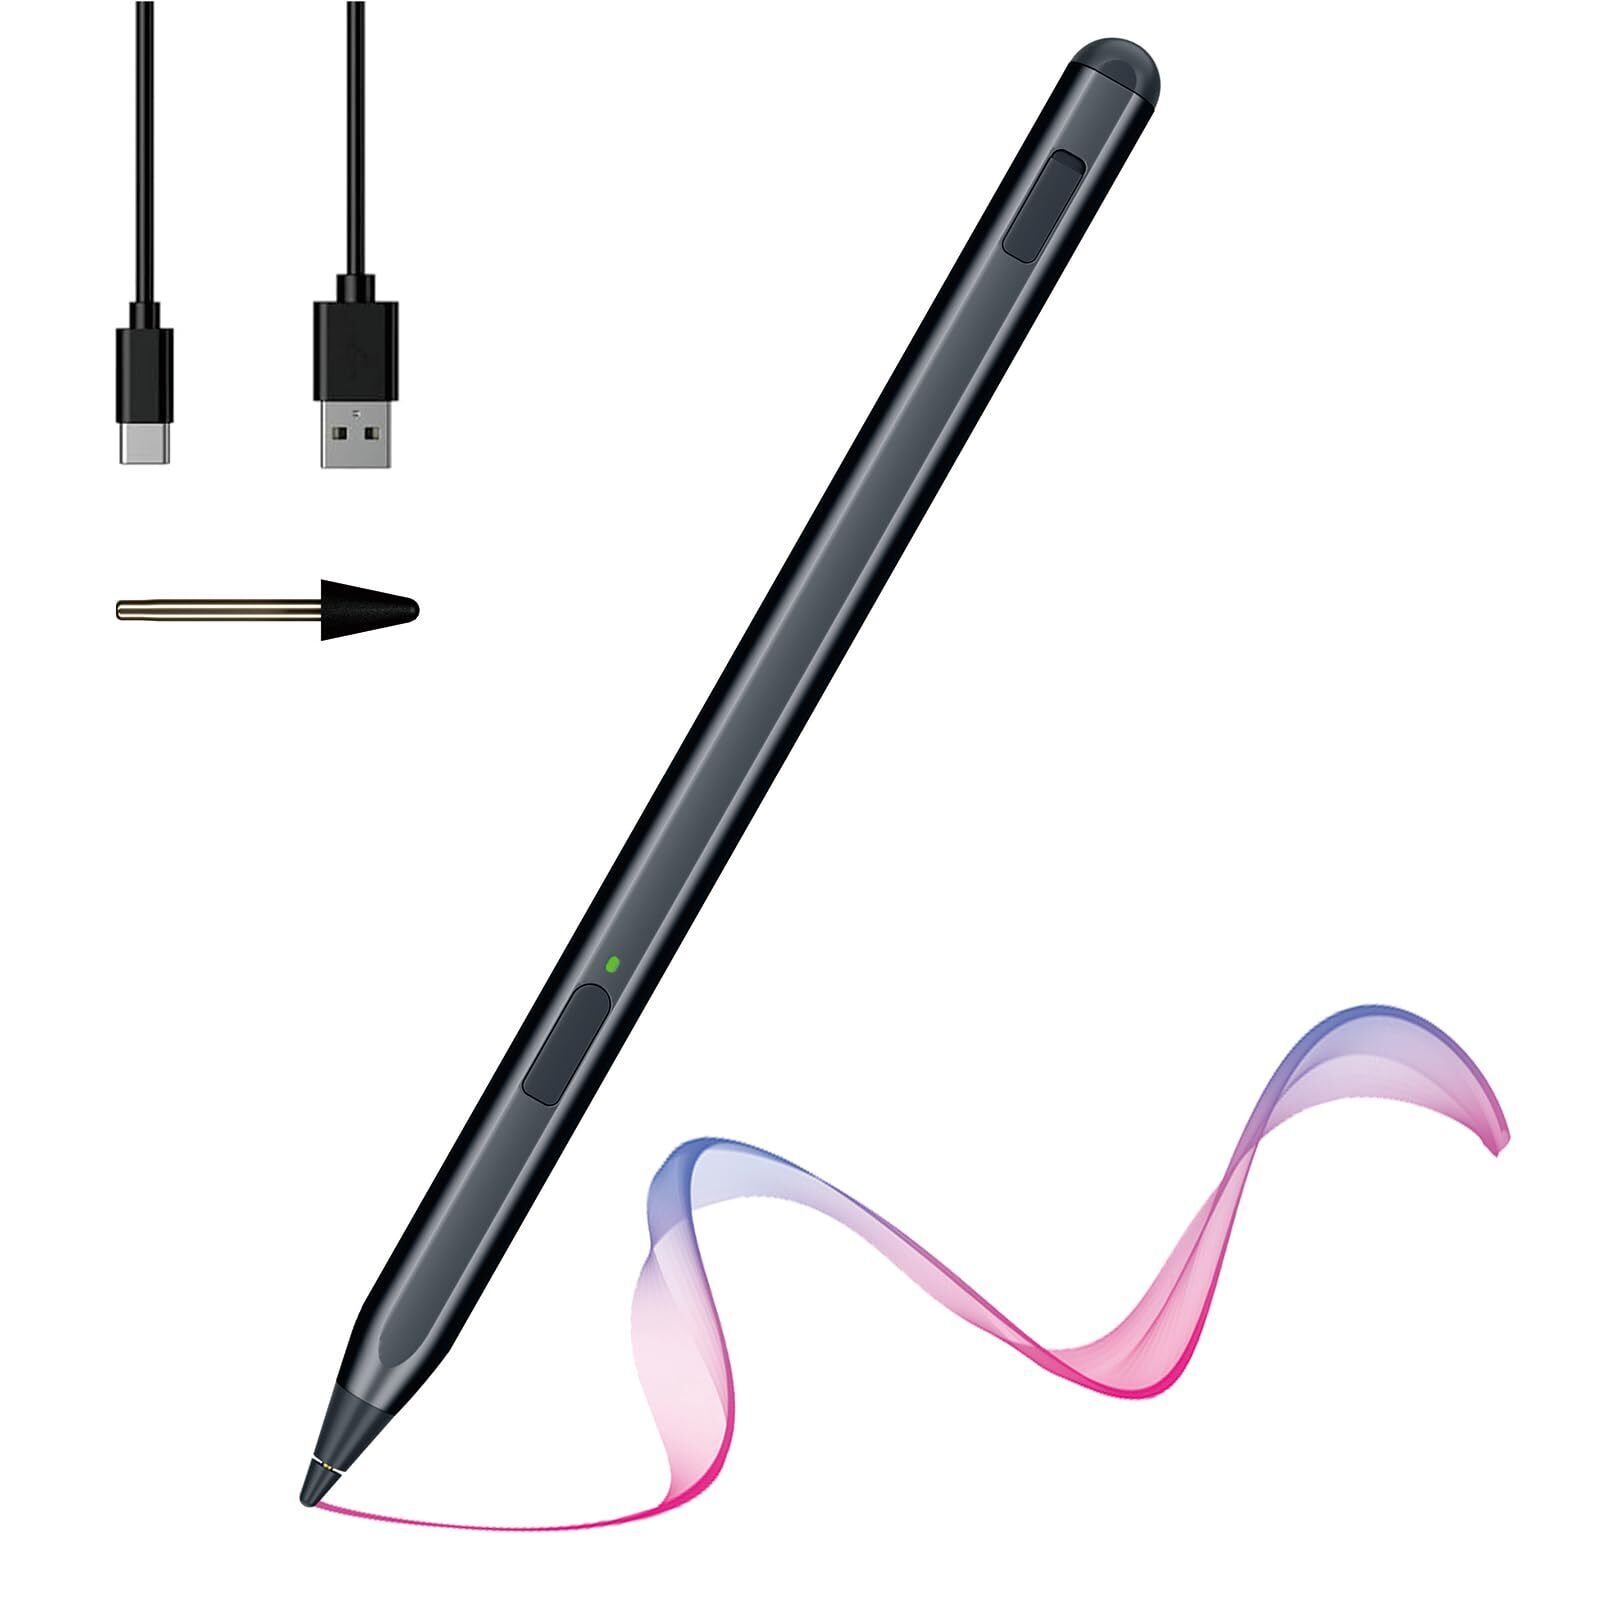 USI 2.0 Stylus Pen for Chromebook Model, Google Pixel Tablet,4096 Levels Pres...